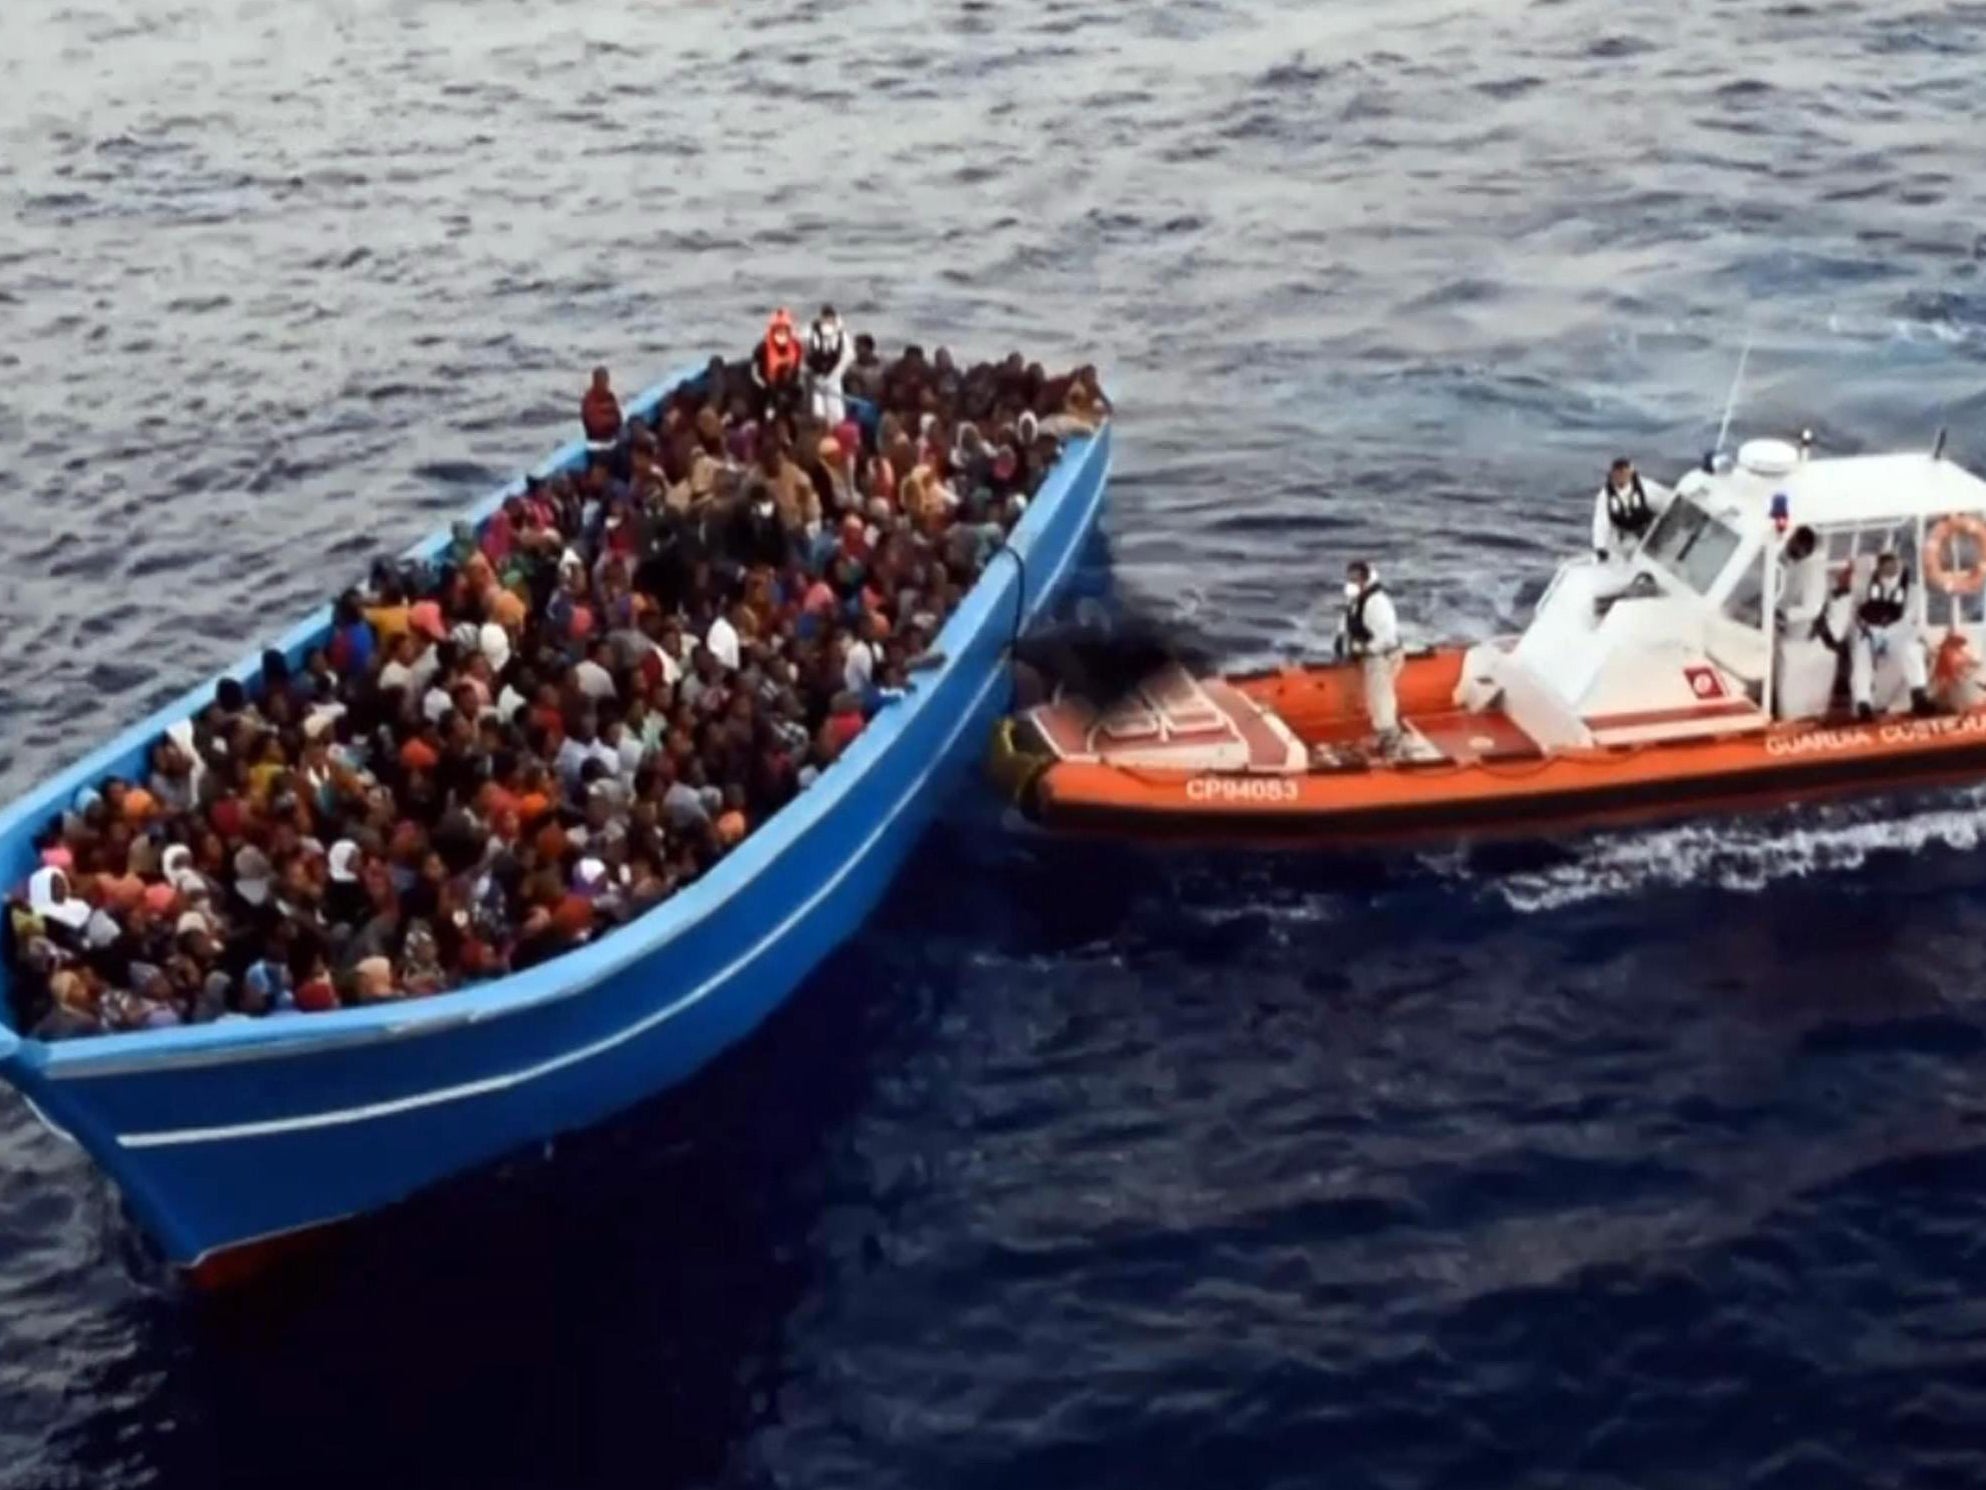 Around 4,700 migrants were rescued in different operation on Mediterranean